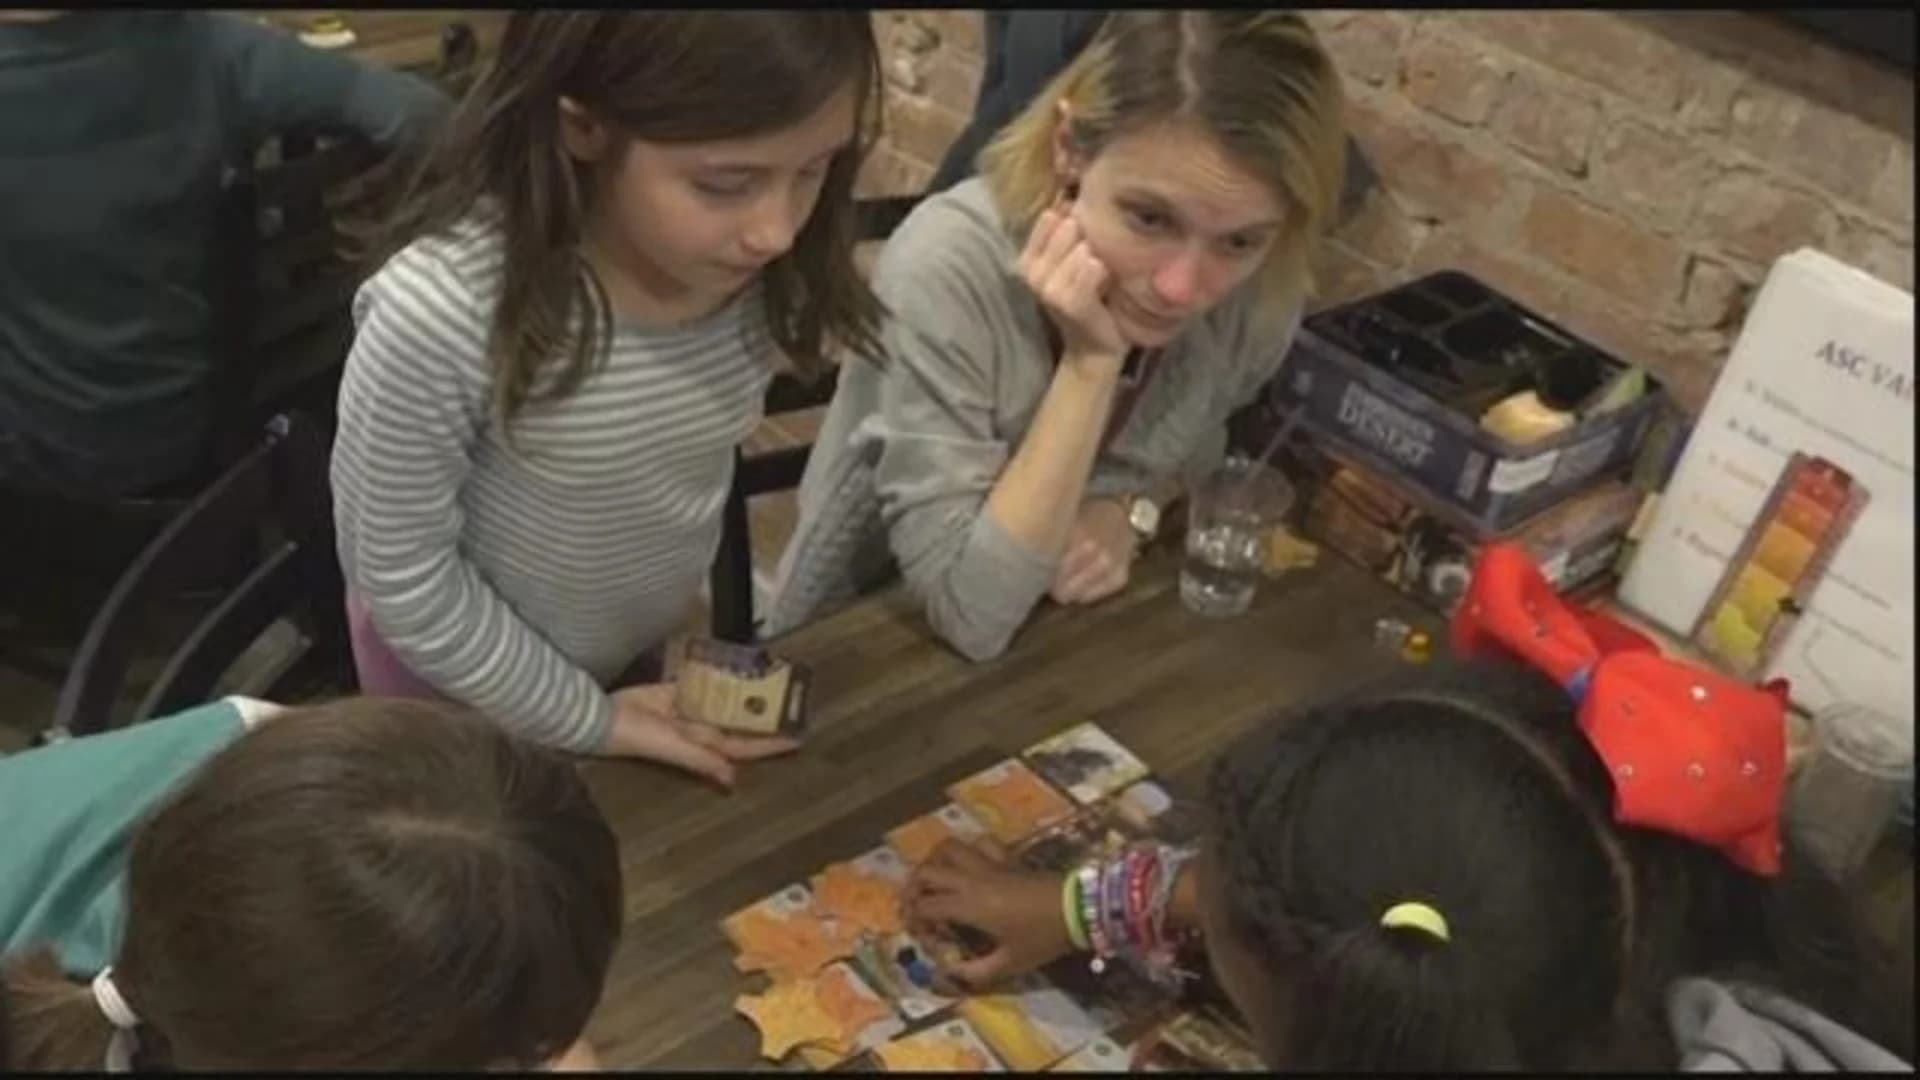 Carroll Gardens board game space puts a twist on child development